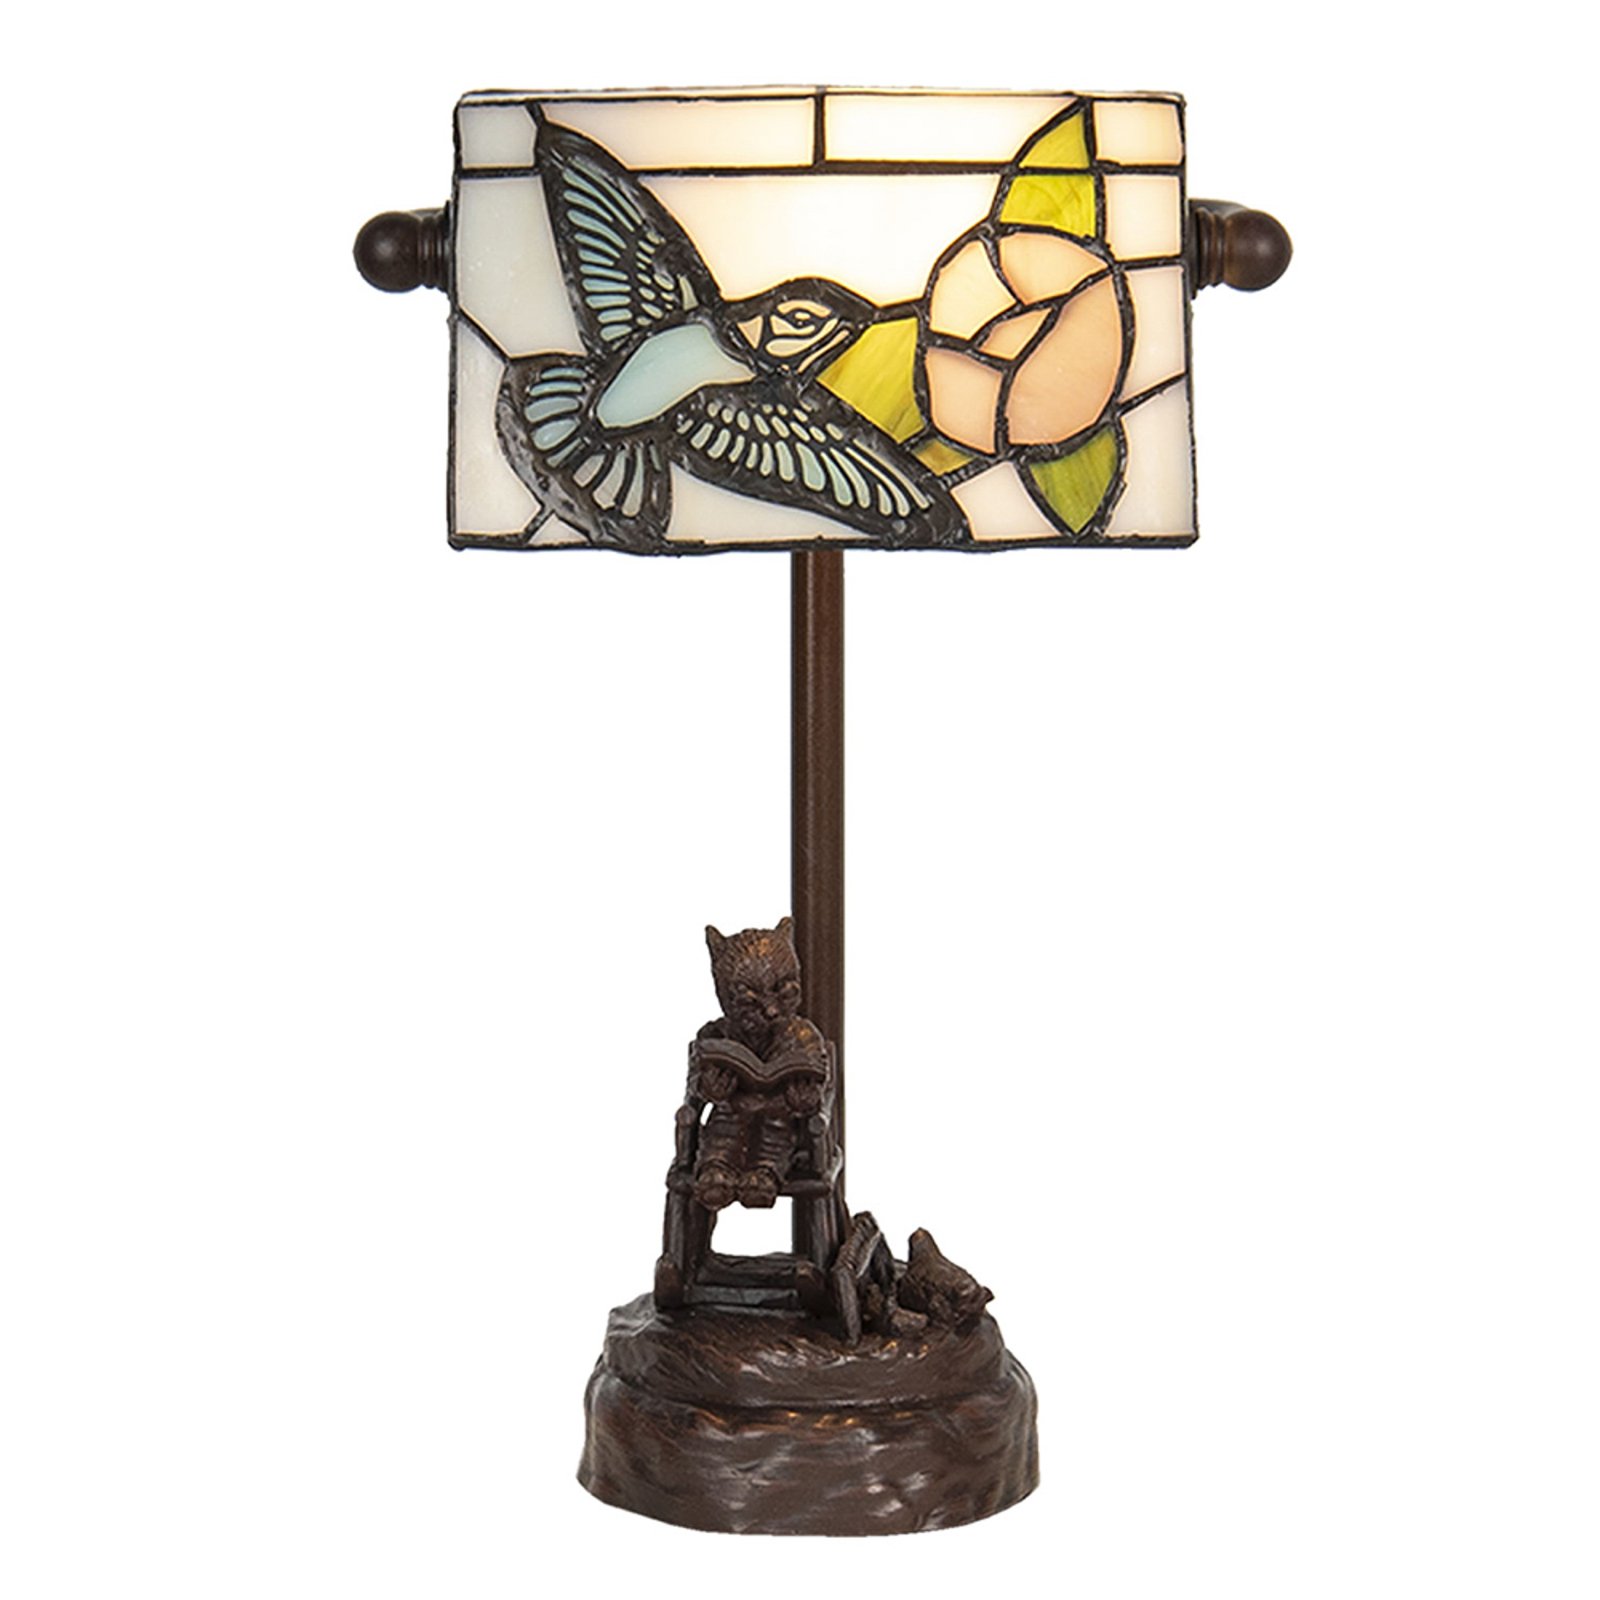 5LL-6050 desk lamp in a Tiffany look